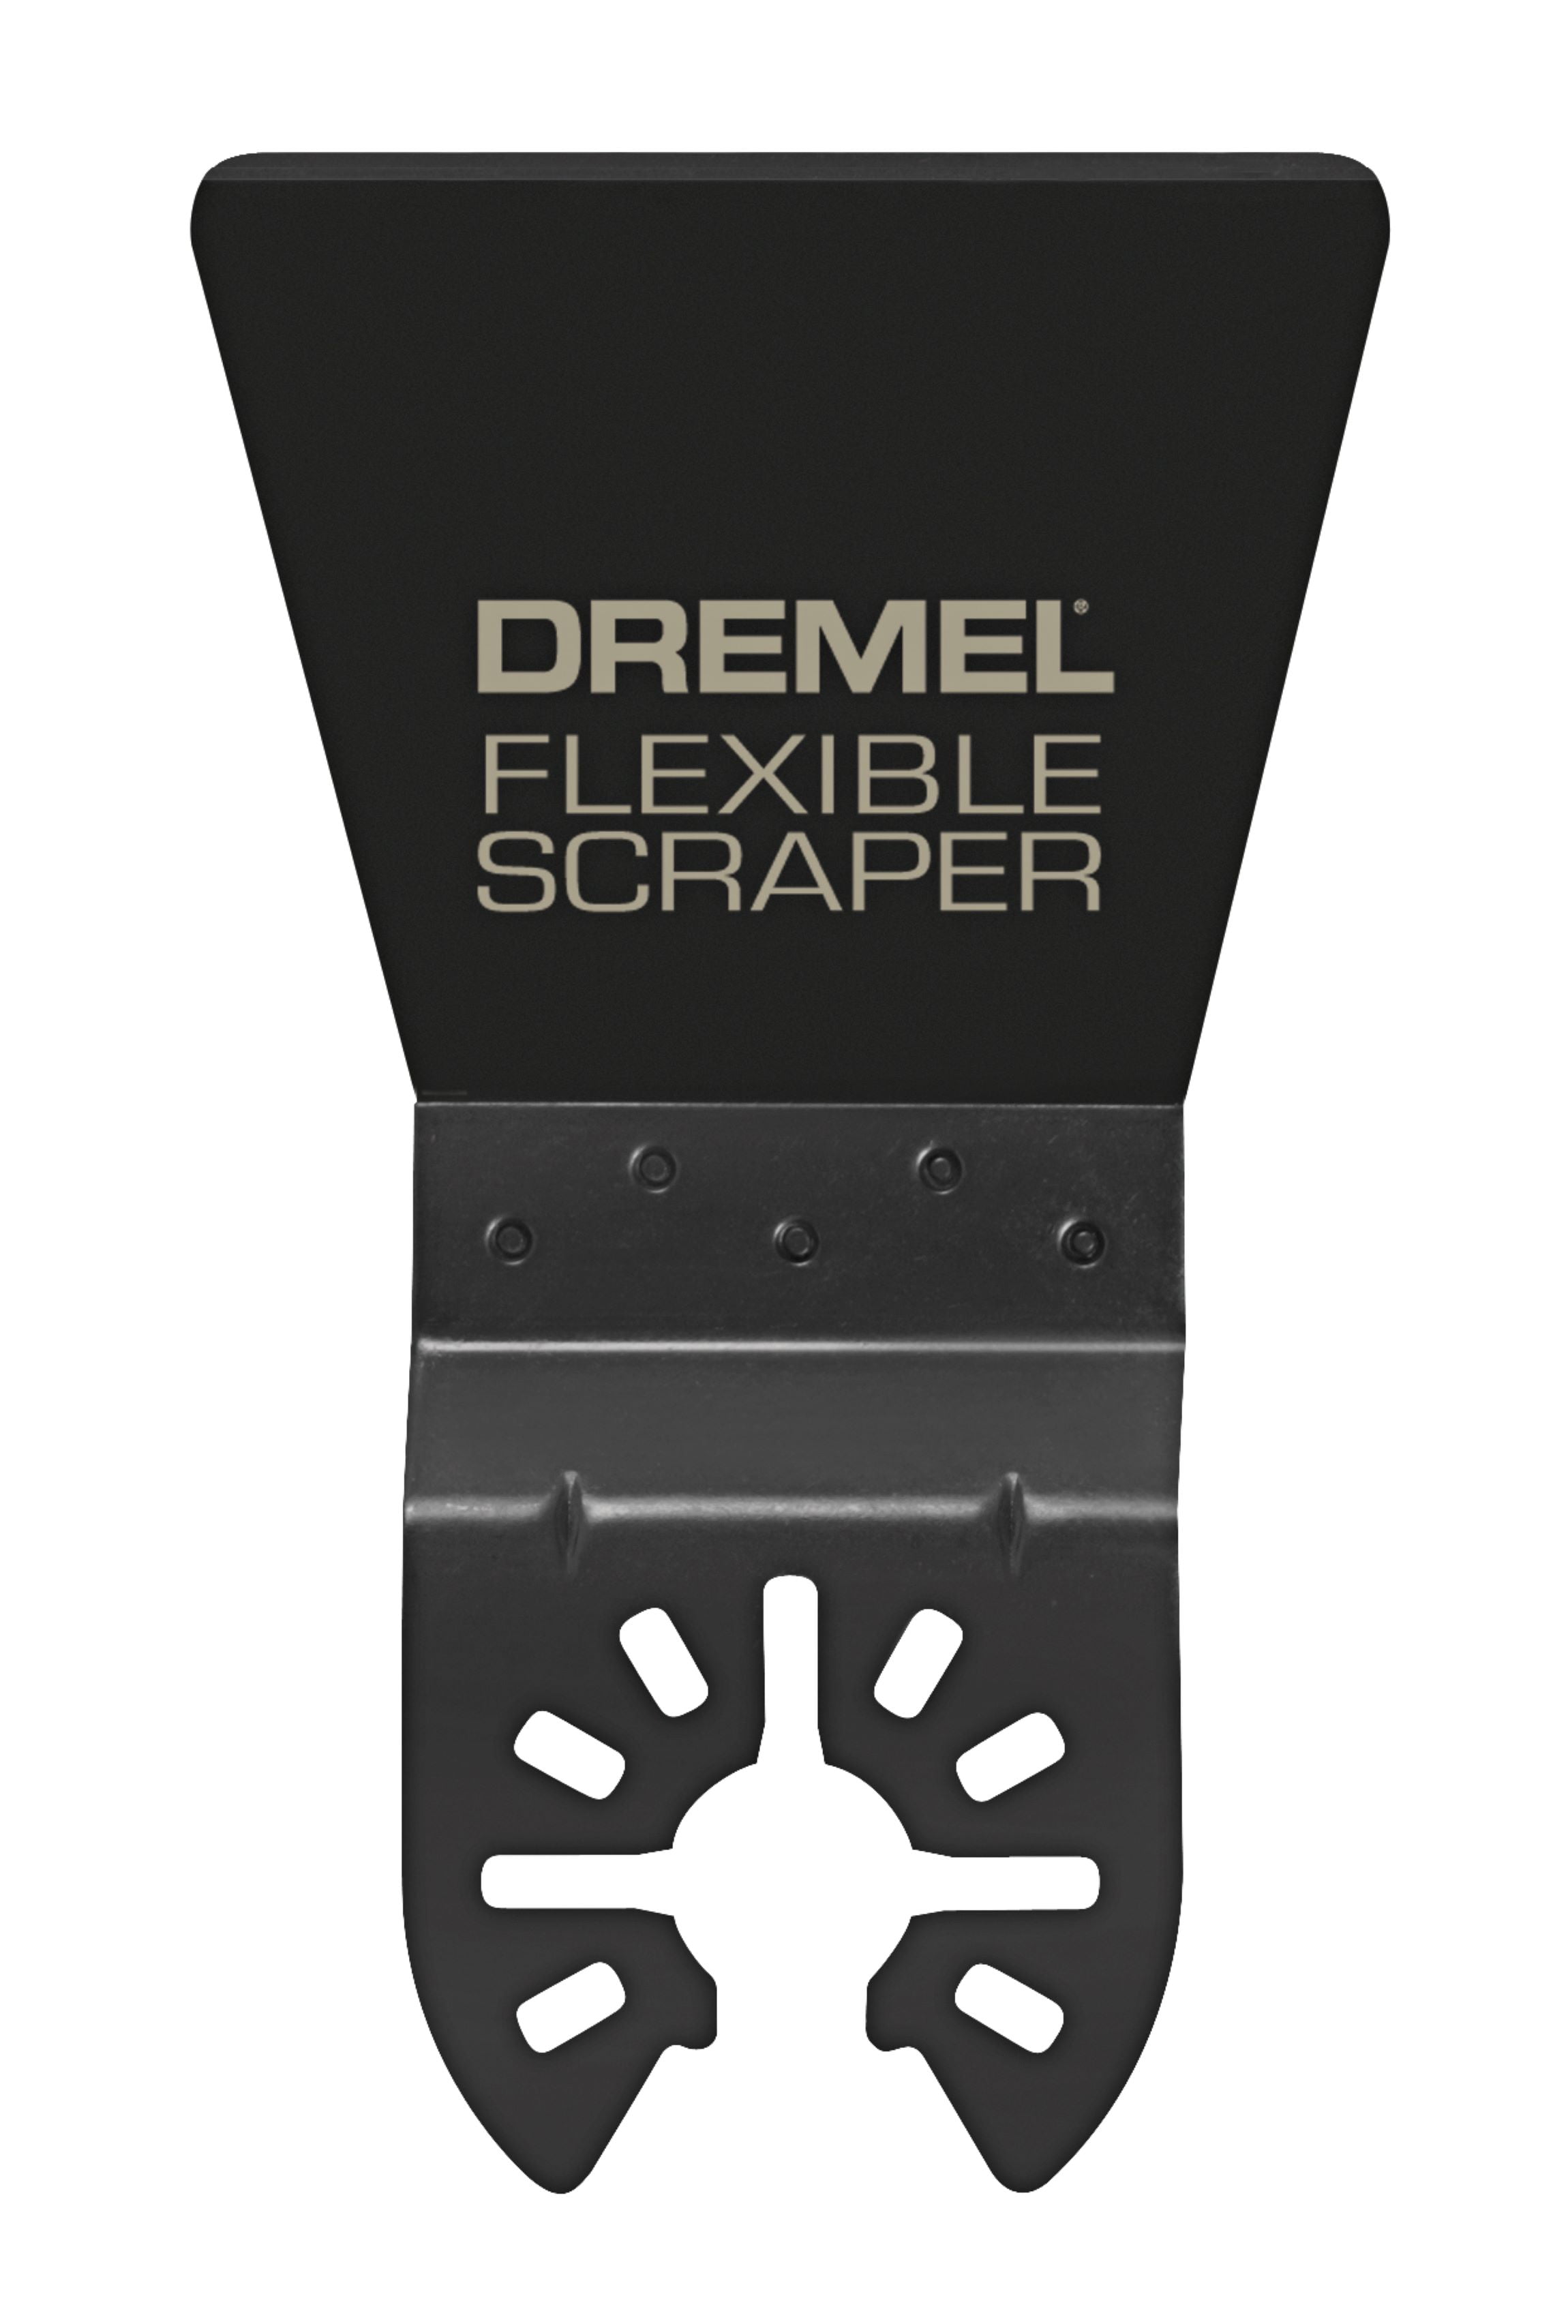 Dremel MM610 Multi-Max Flexible Scraper Blade Oscillating Tool Accessory  for Soft Materials 